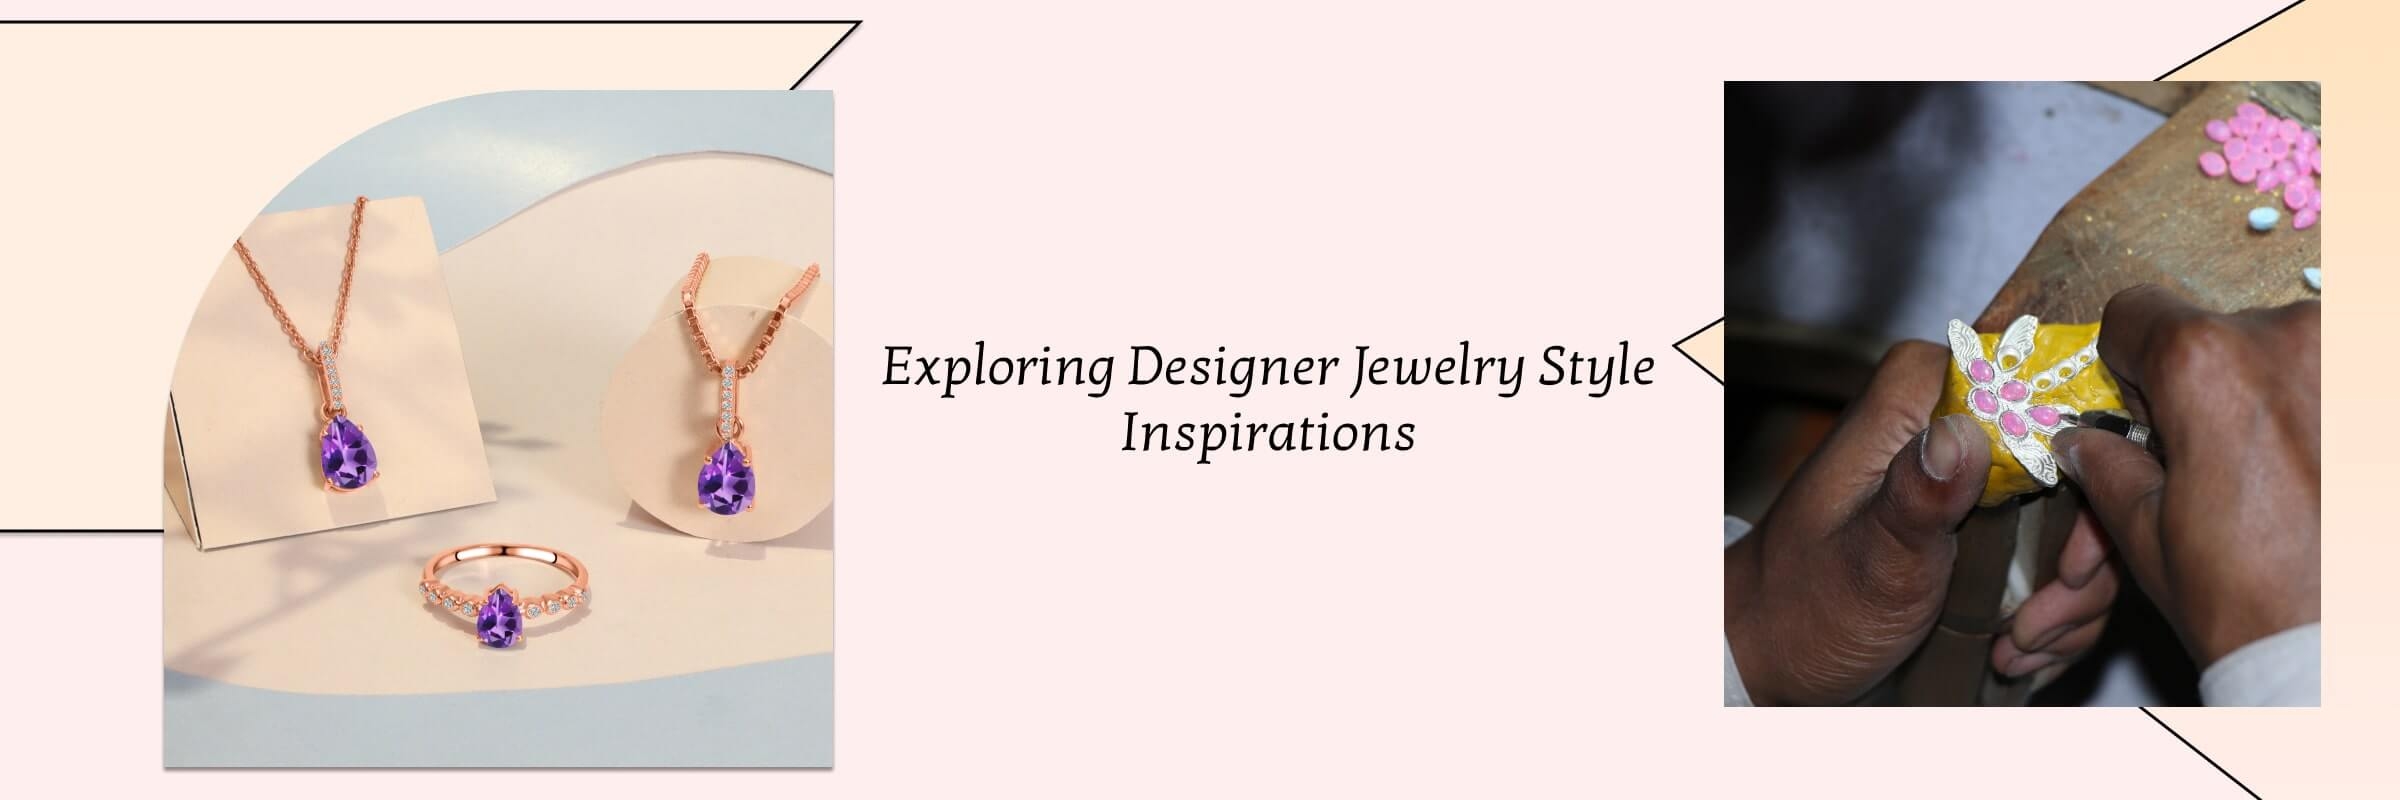 Ideas for Incorporating Designer Jewelry